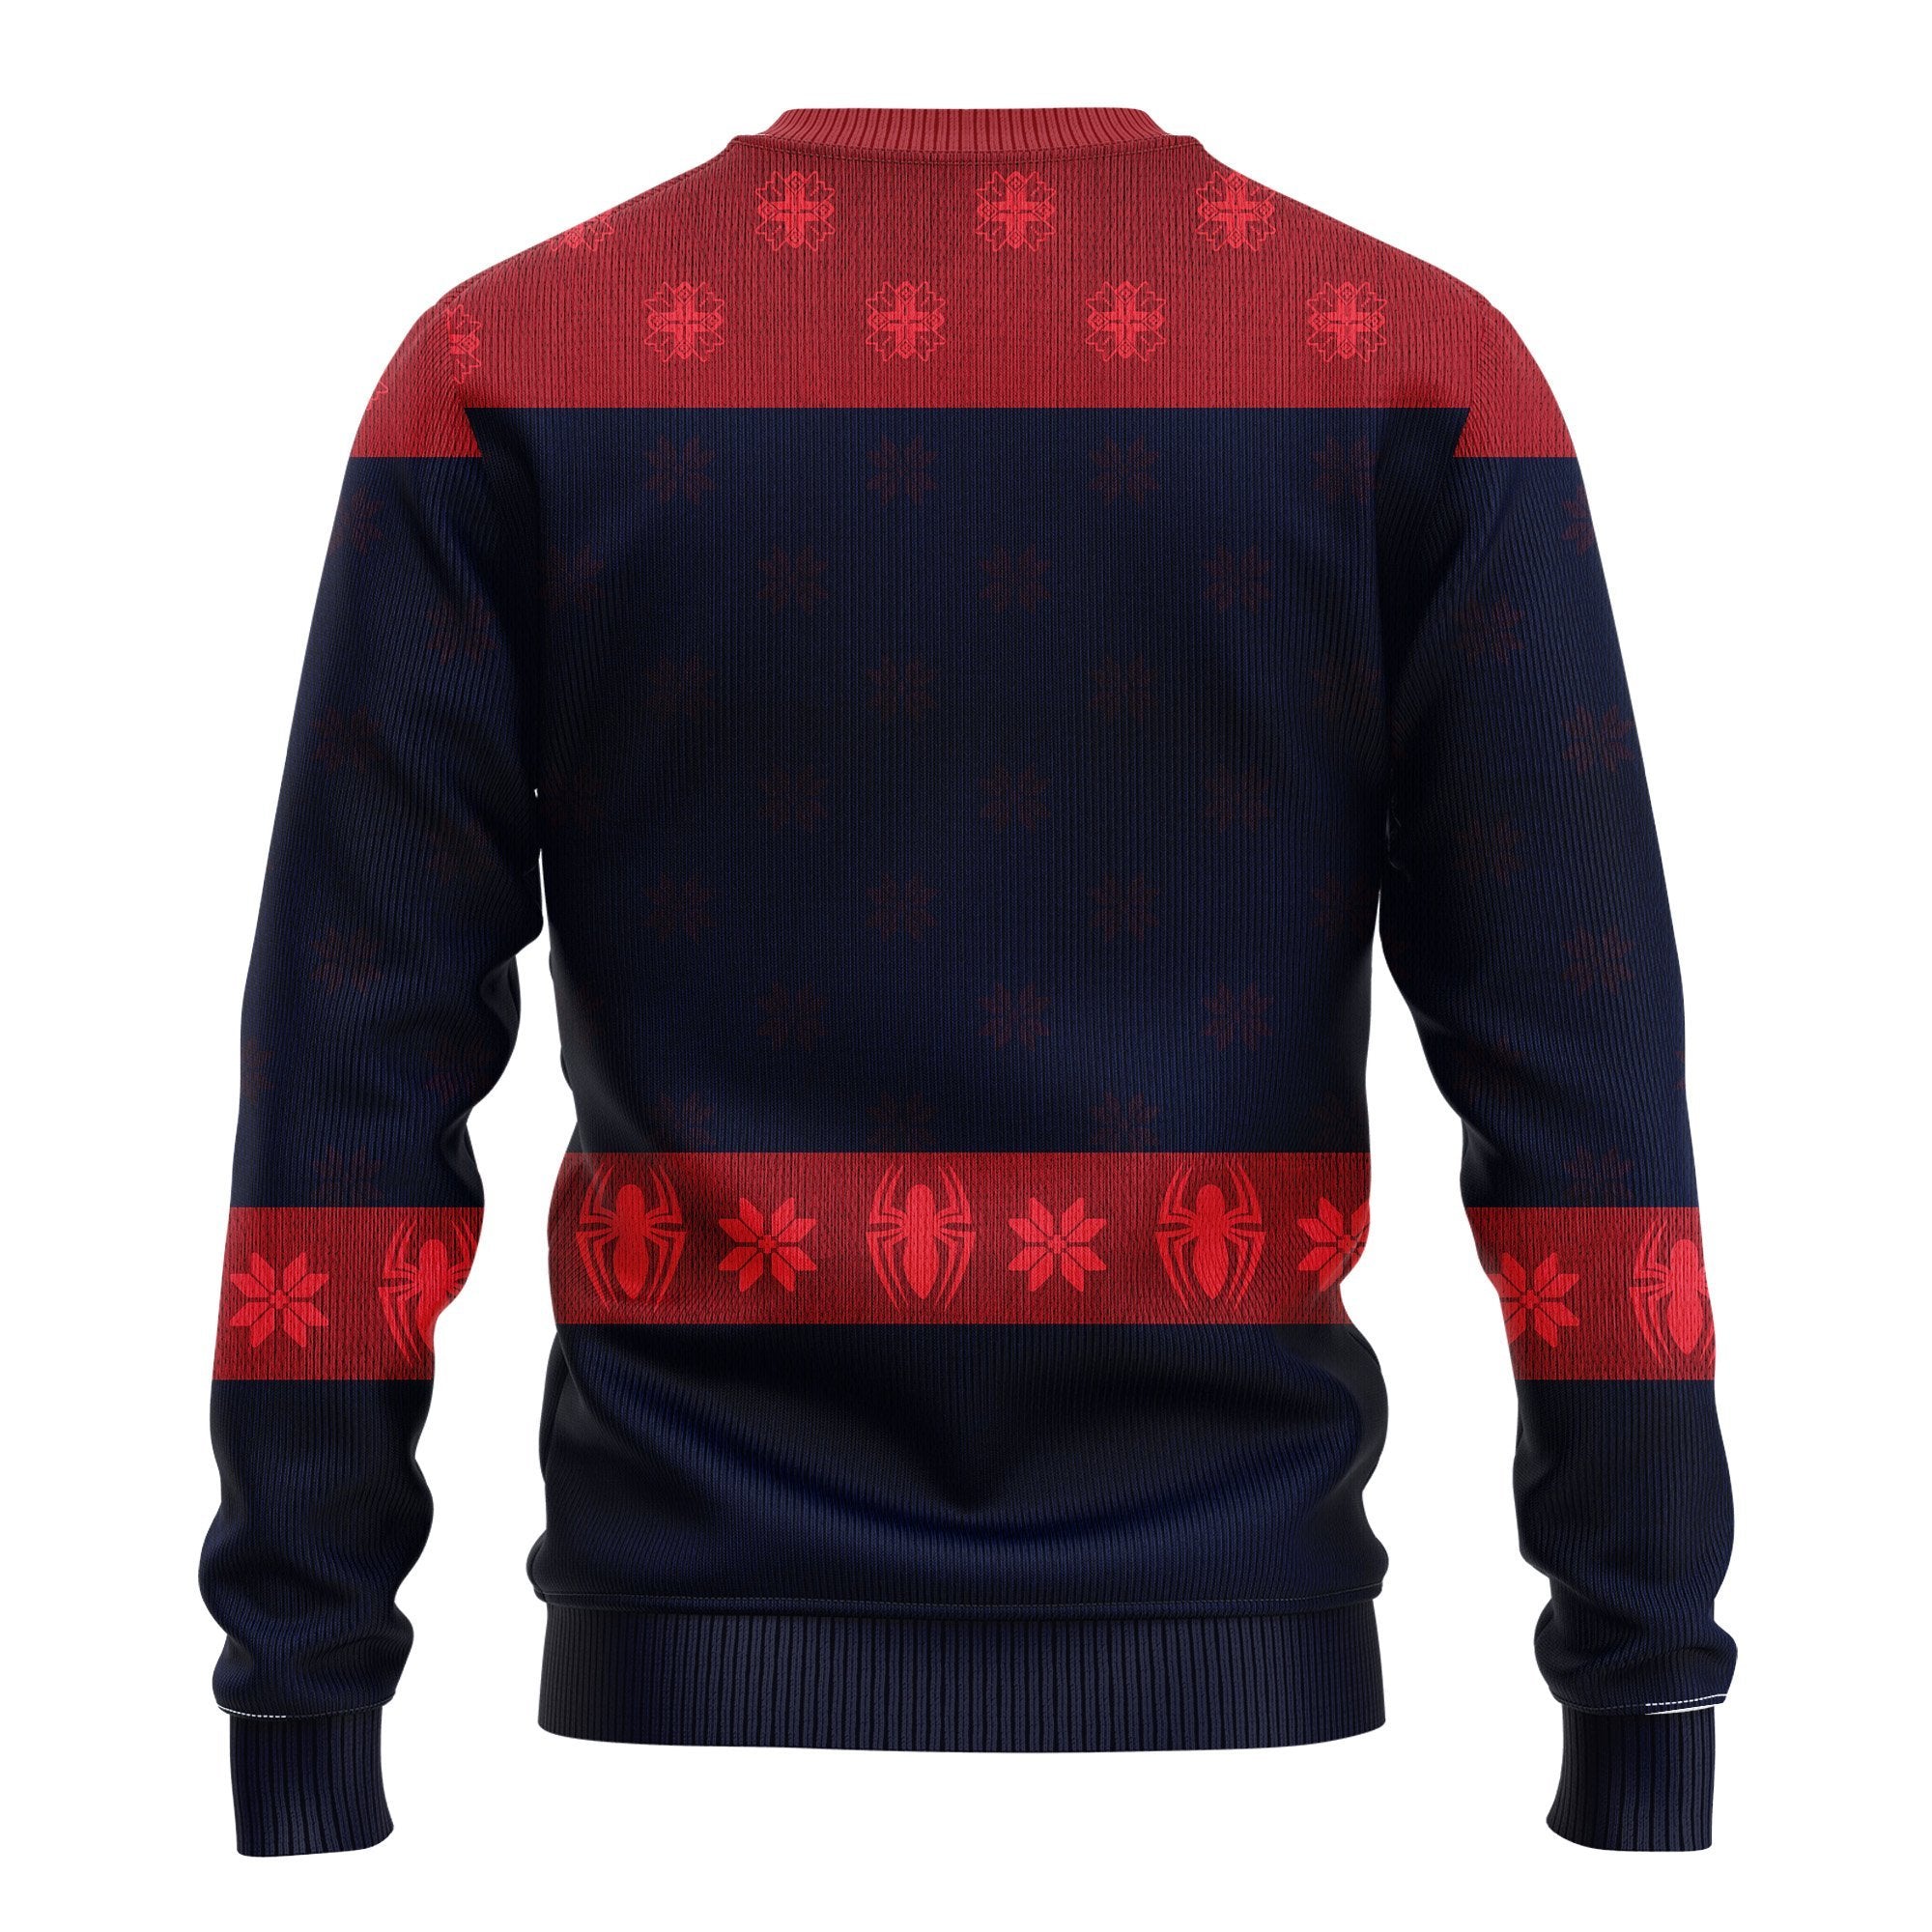 Spiderman Custom Christmas Sweater Amazing Gift Idea Thanksgiving Gift